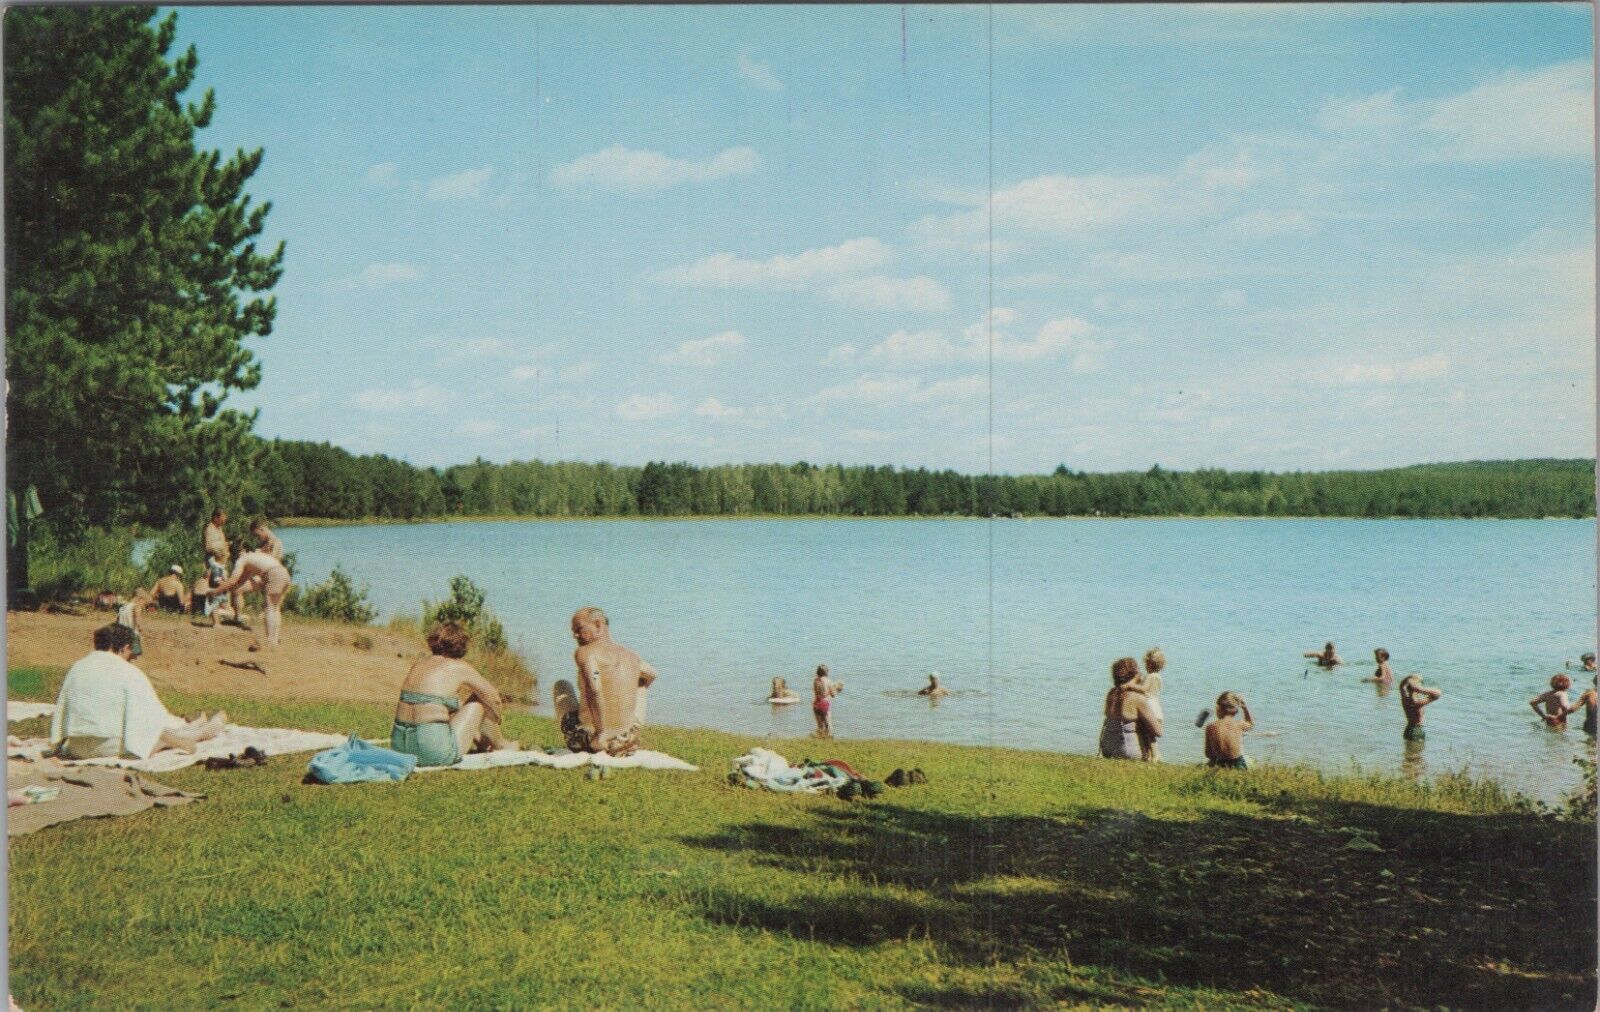 Beach Crystal Lake Sayner, WI ~ Woodruff Minocqua Wisconsin 1960s UNP PC 7064.4